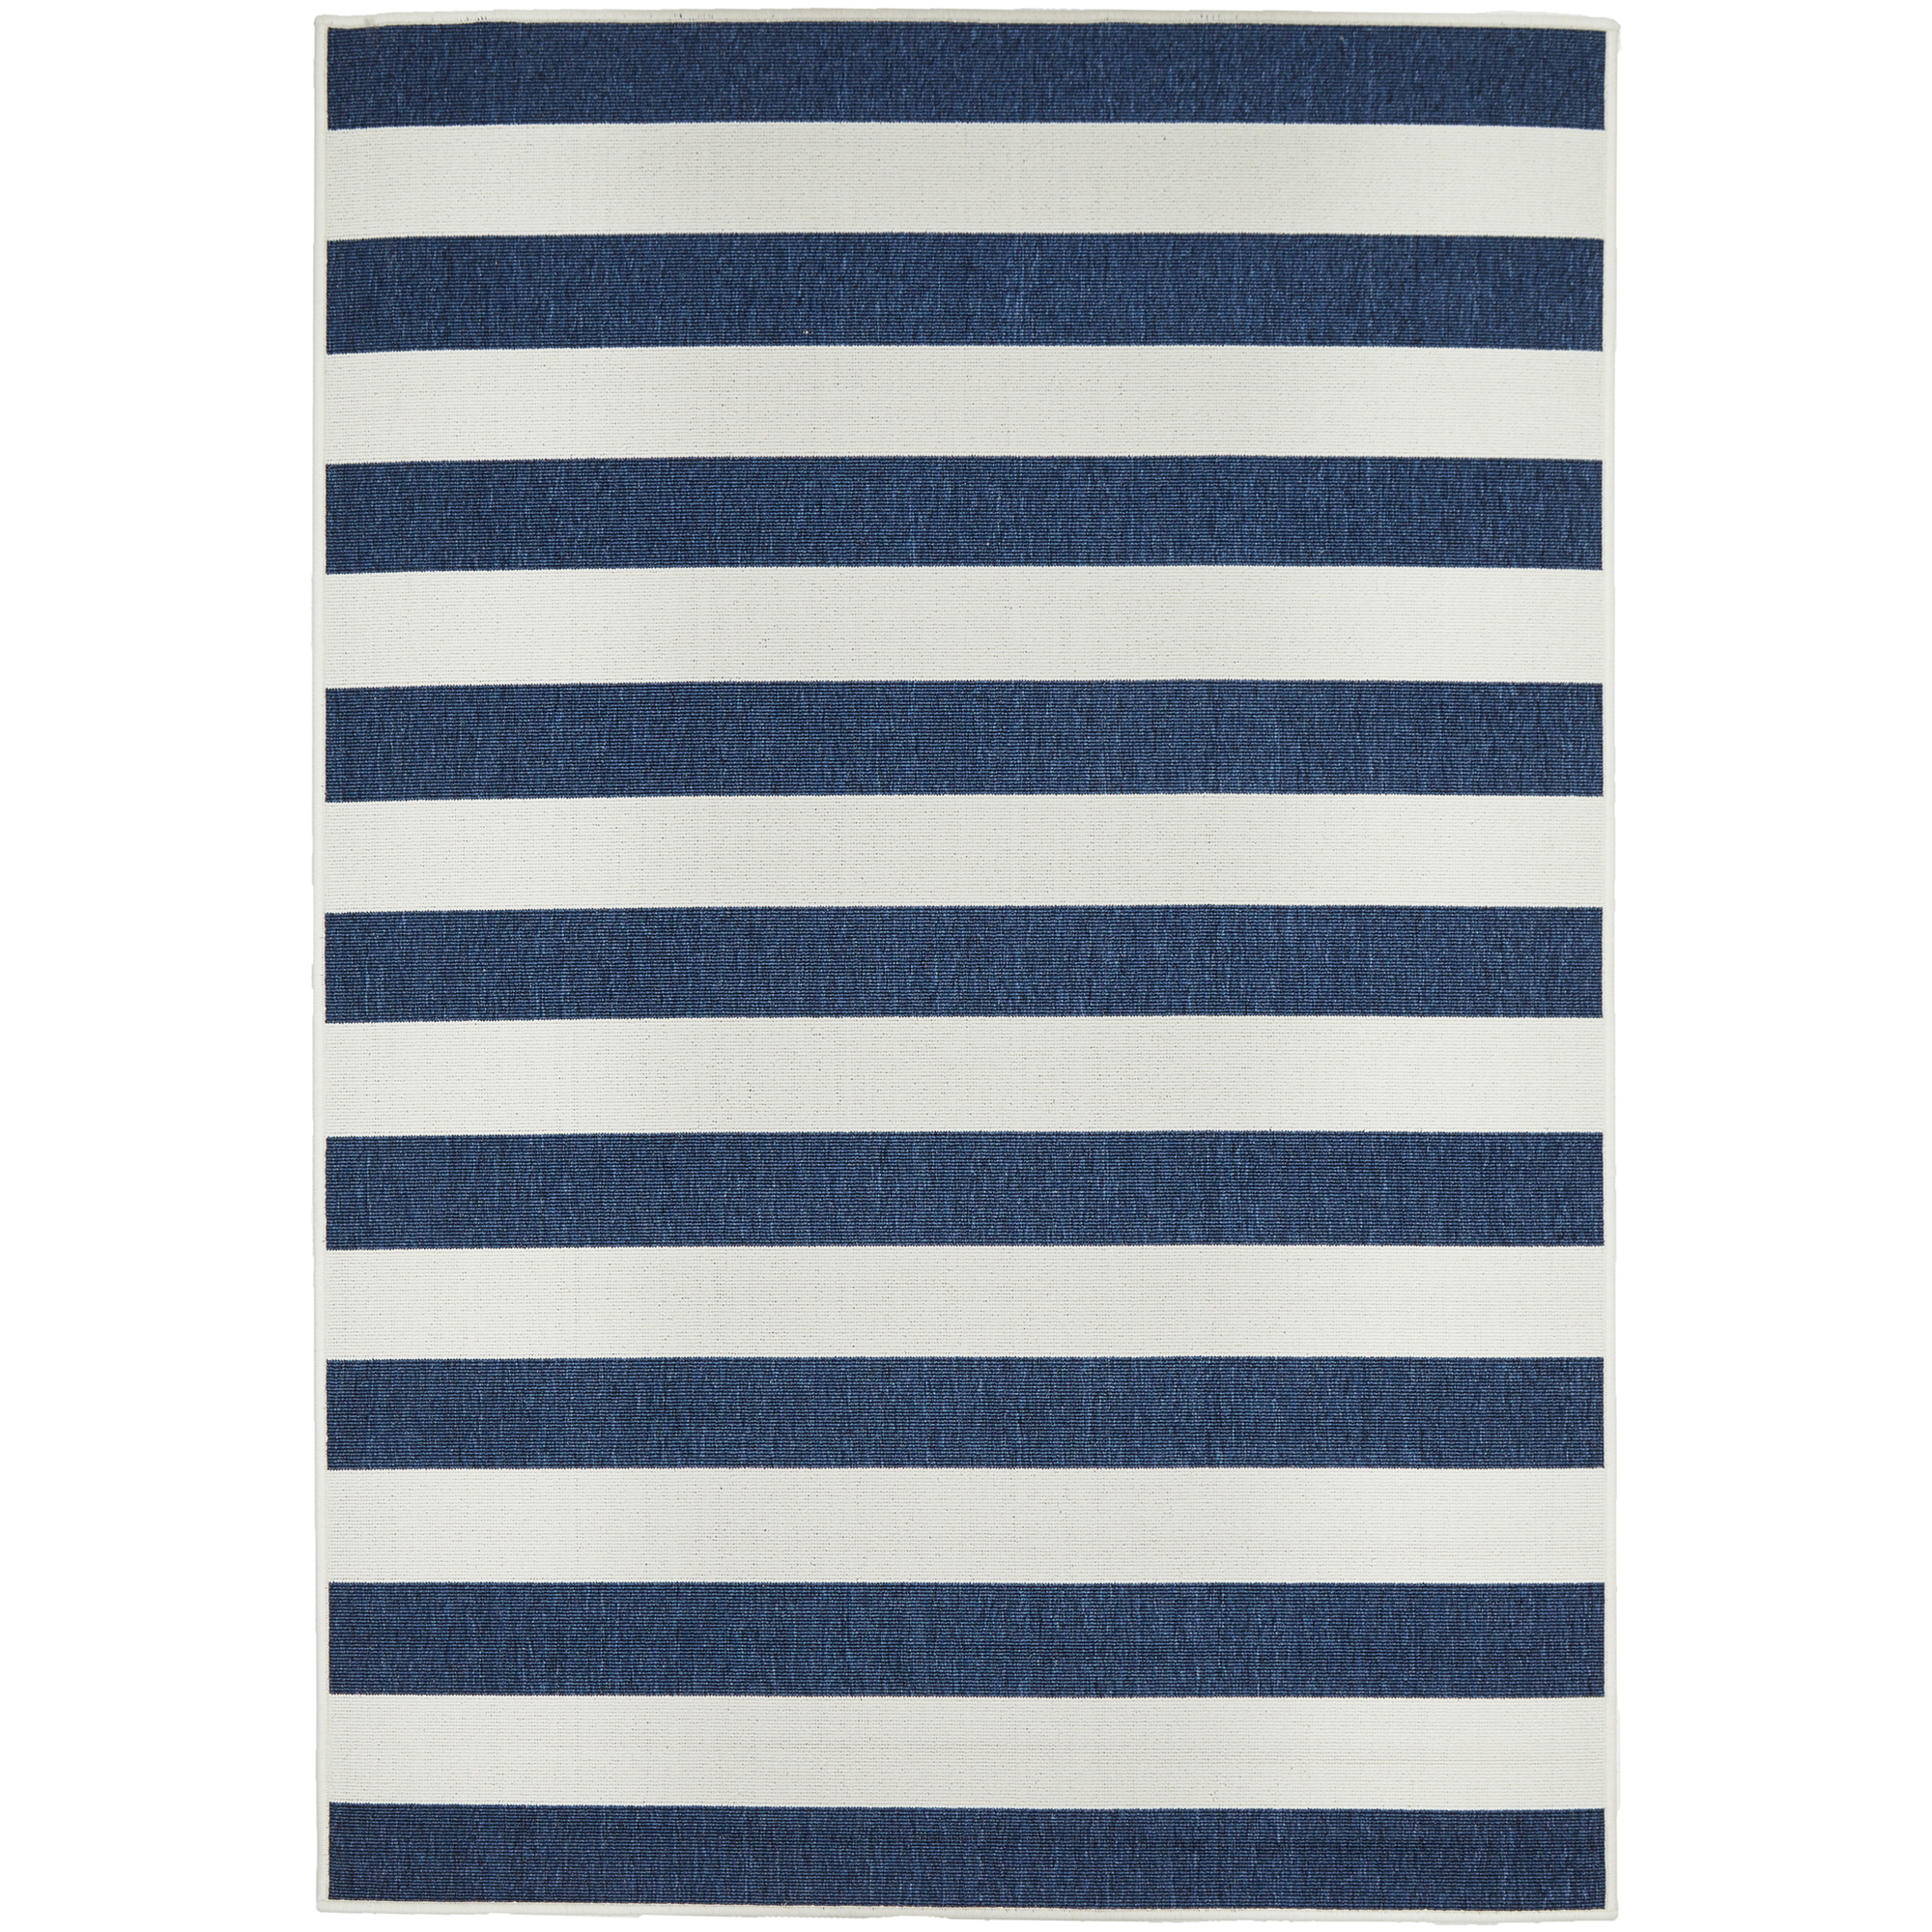 Network Navy White Striped Power, Navy Blue Striped Rug